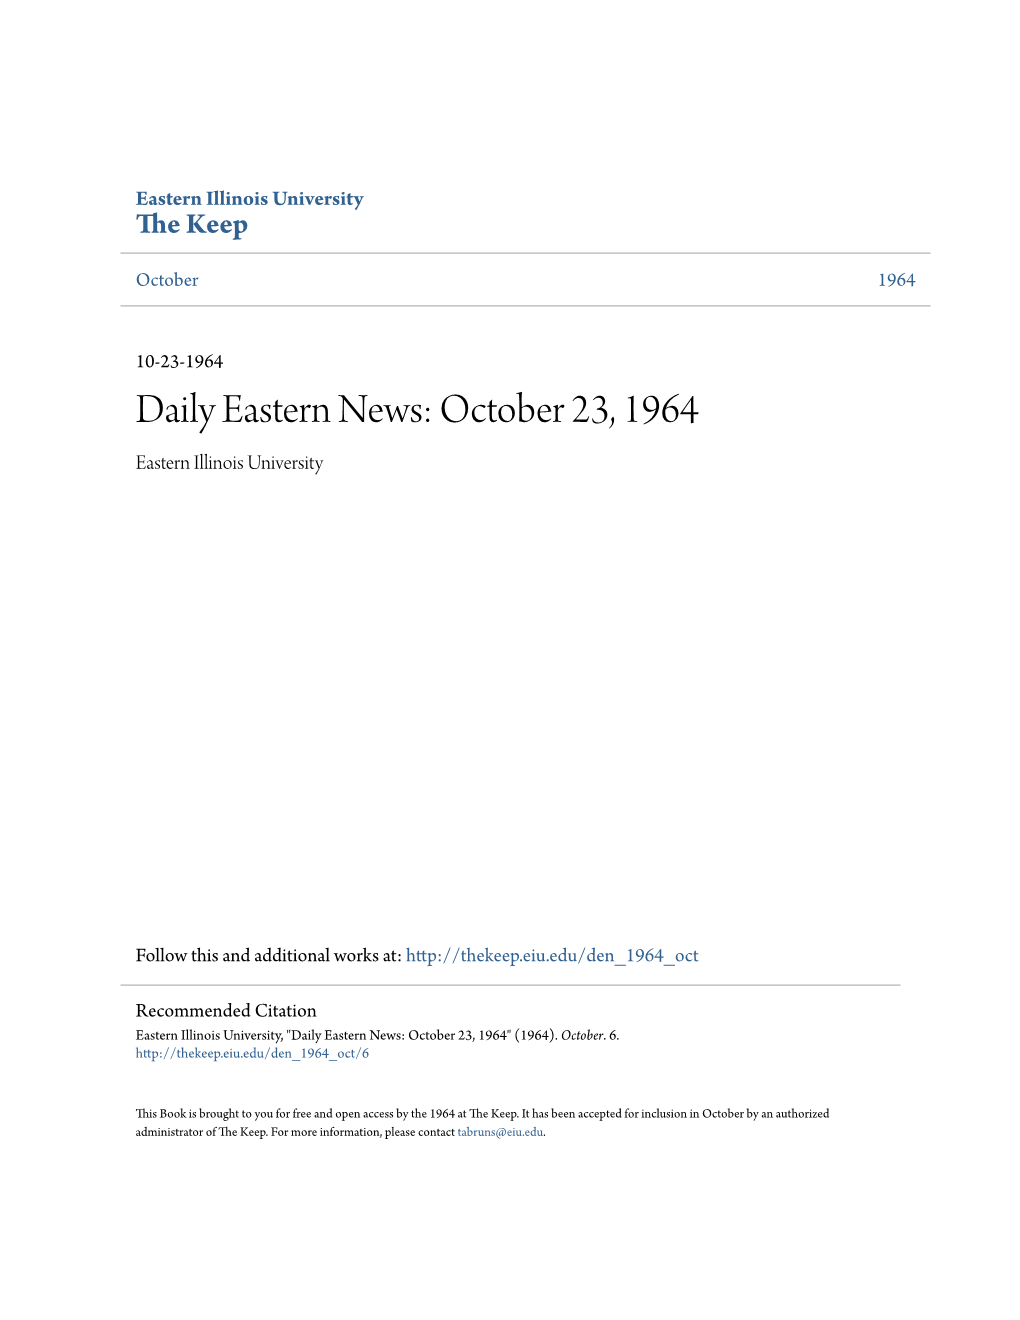 Eastern News: October 23, 1964 Eastern Illinois University